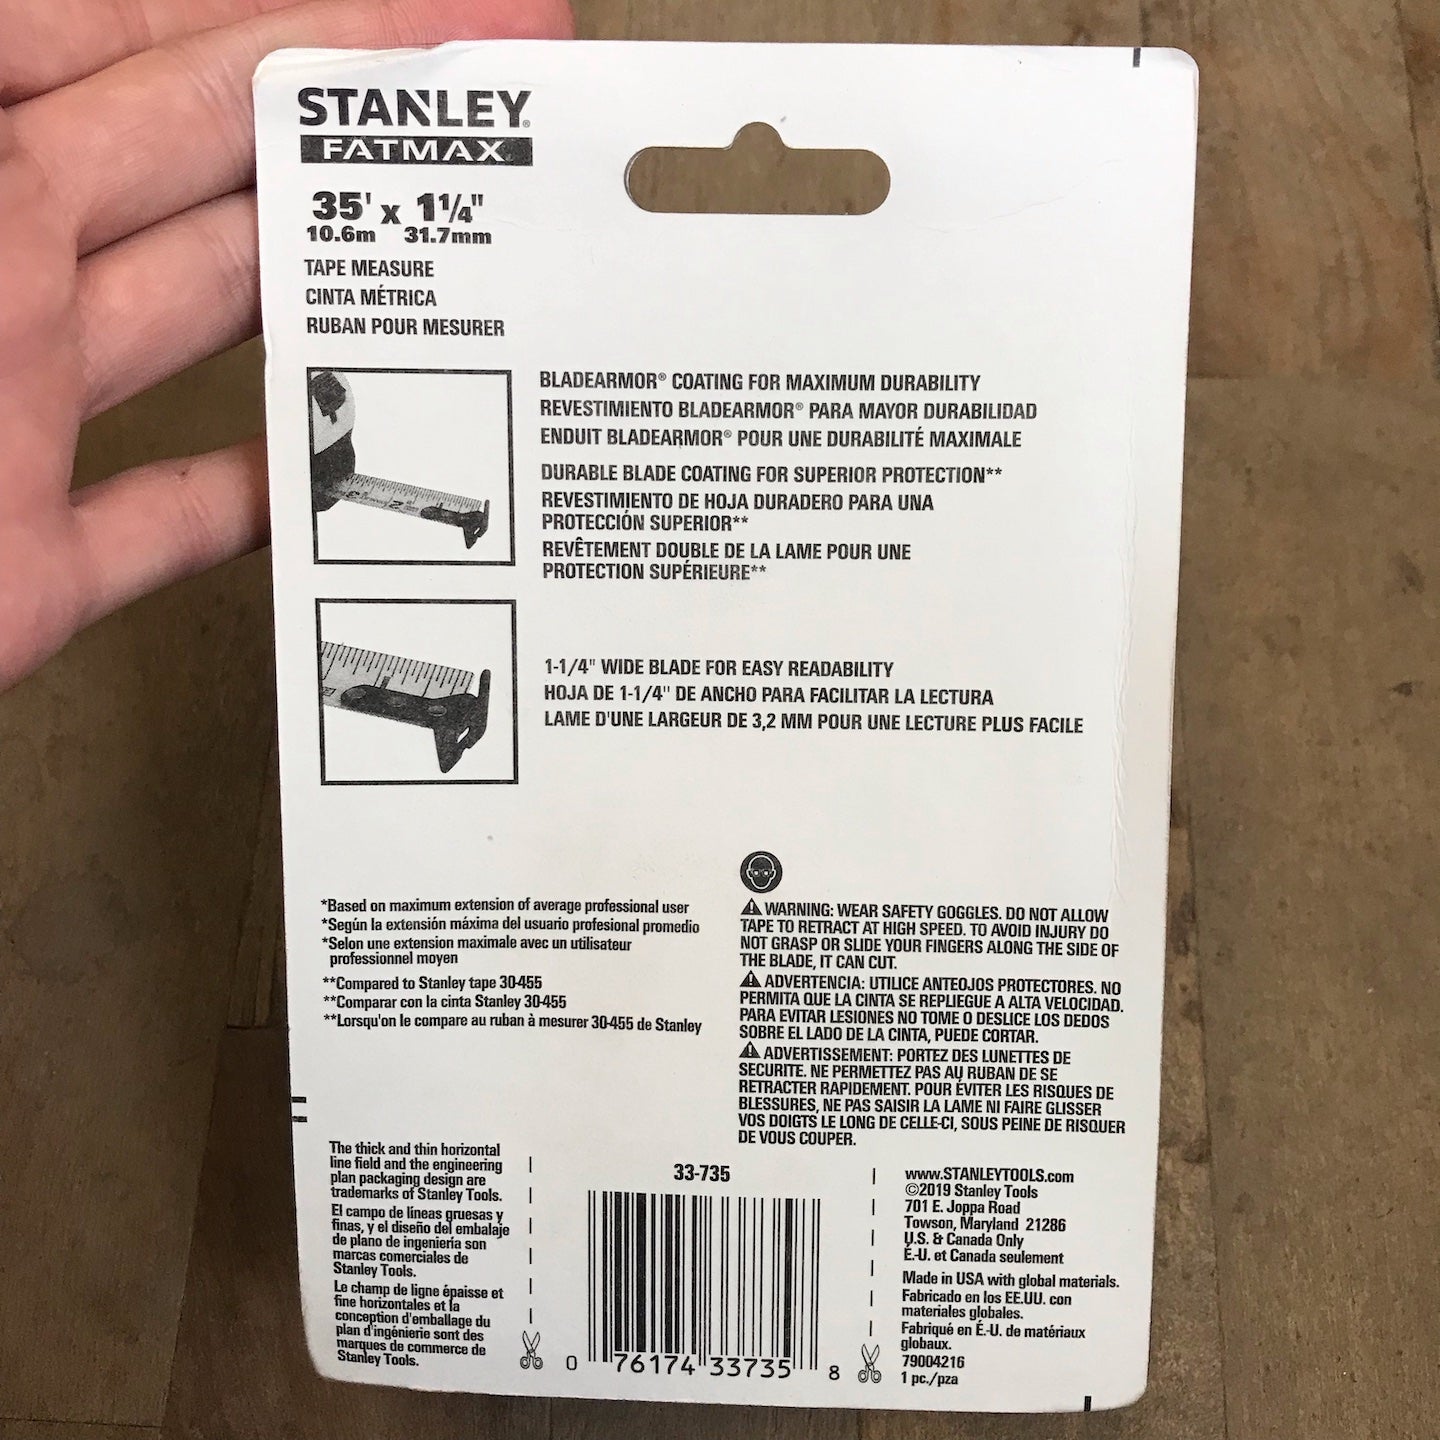 Stanley Fatmax 35' x 1 1/4" Tape Measure (33-735)